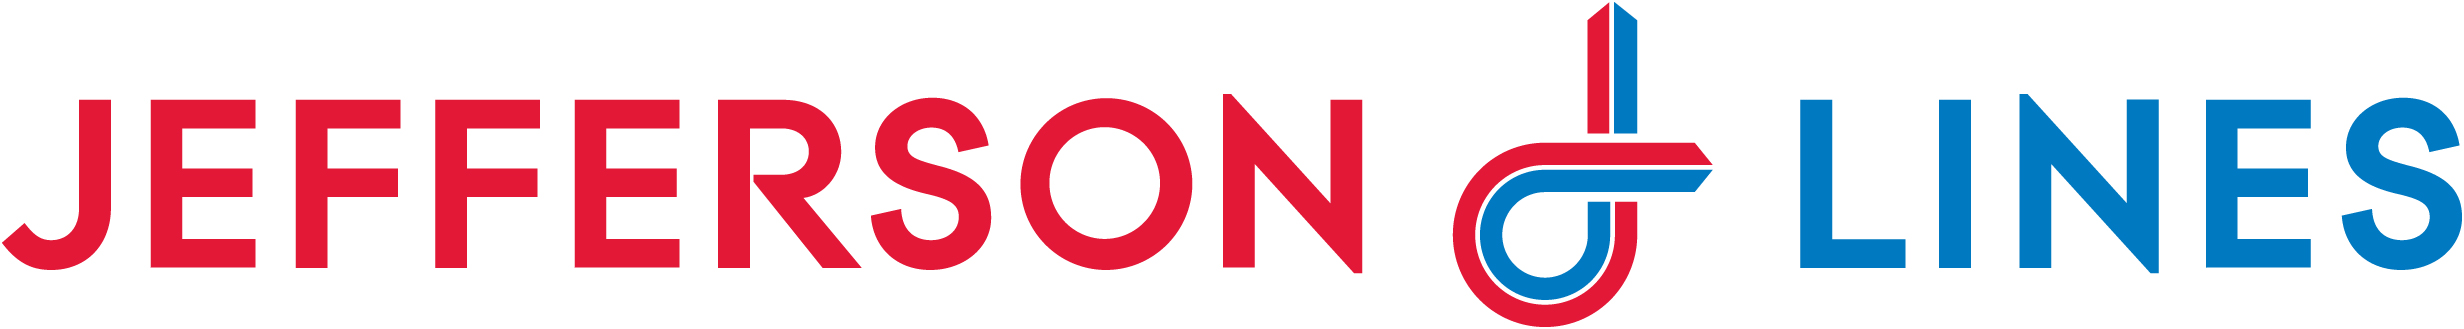 logo-jefferson-lines